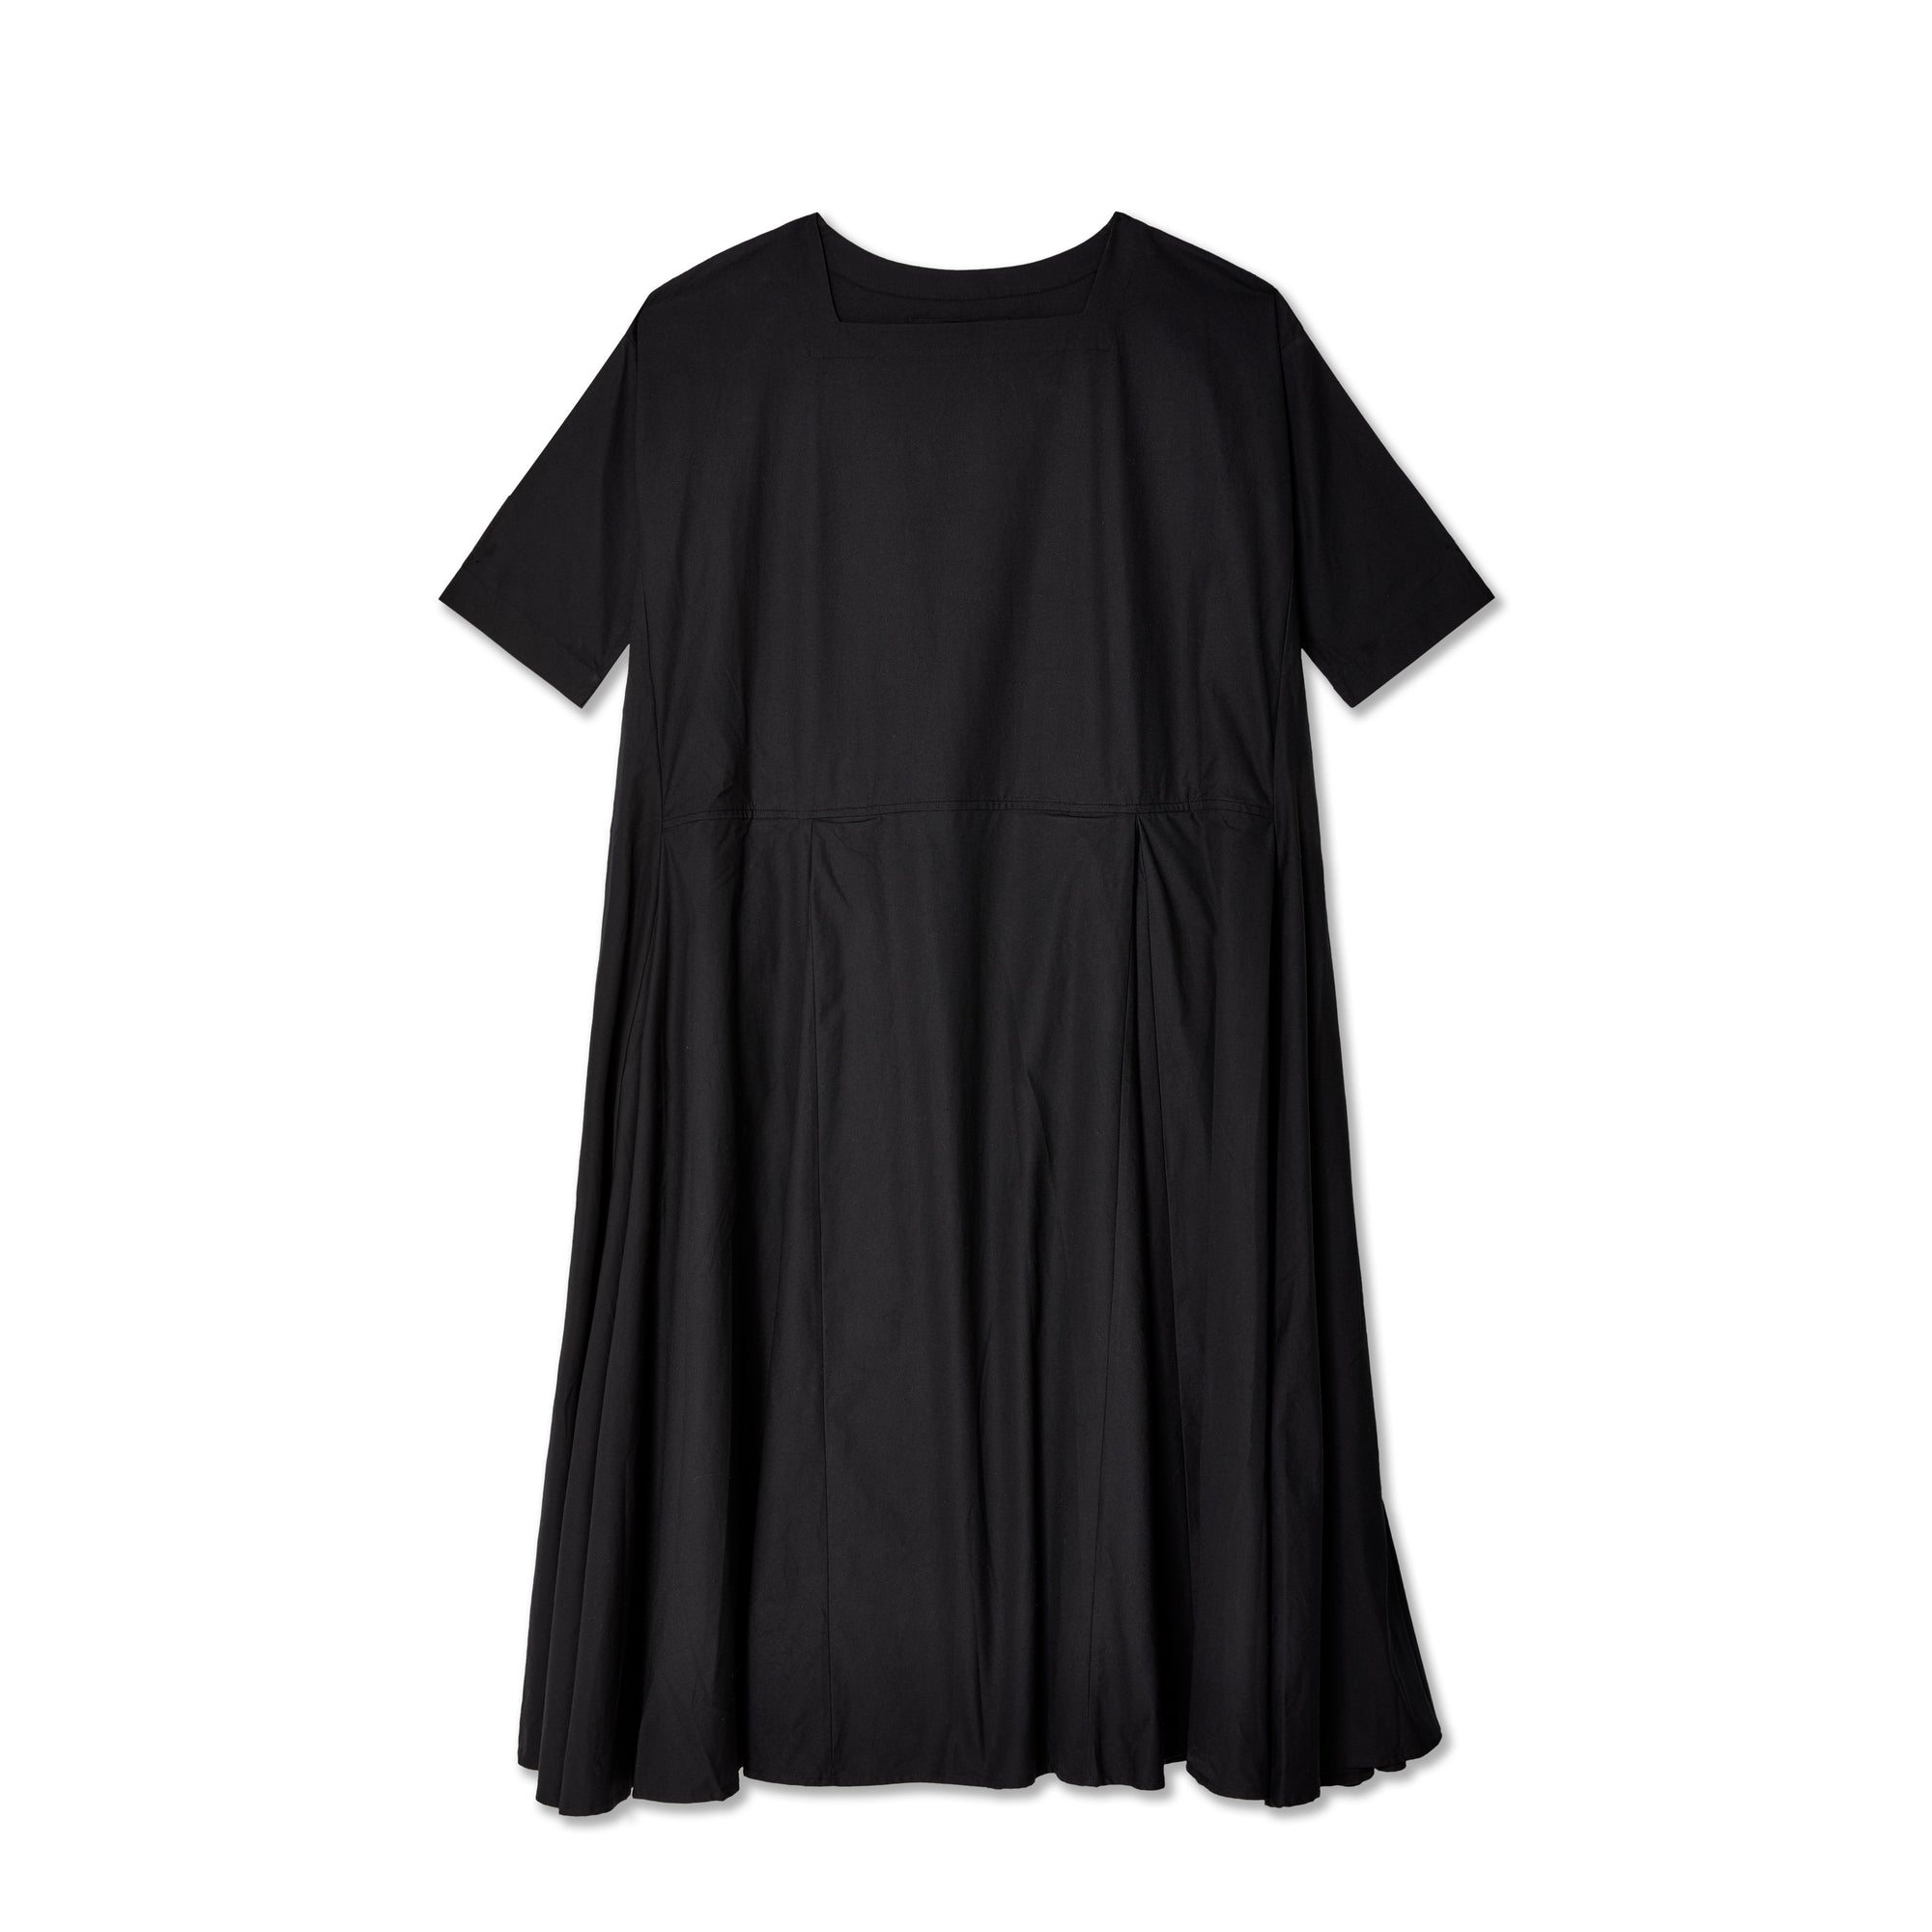 Egg Trading - Women's Pleated Dress - (Black) view 1